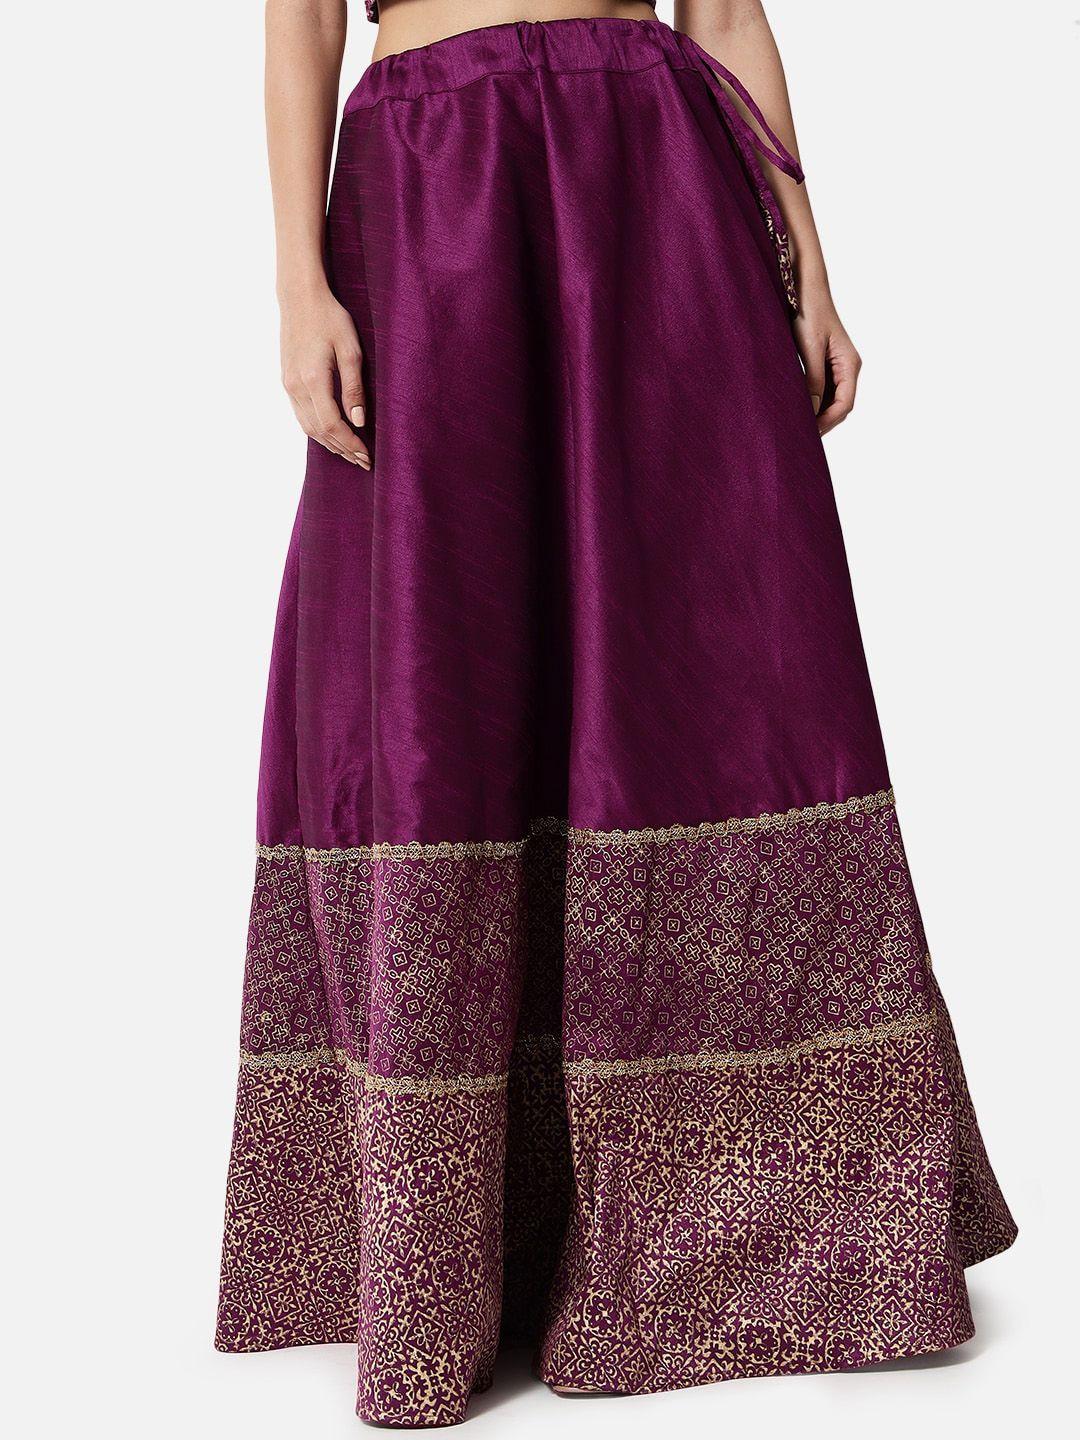 studio rasa ethnic motifs printed embellished detailed flared maxi ethnic skirt